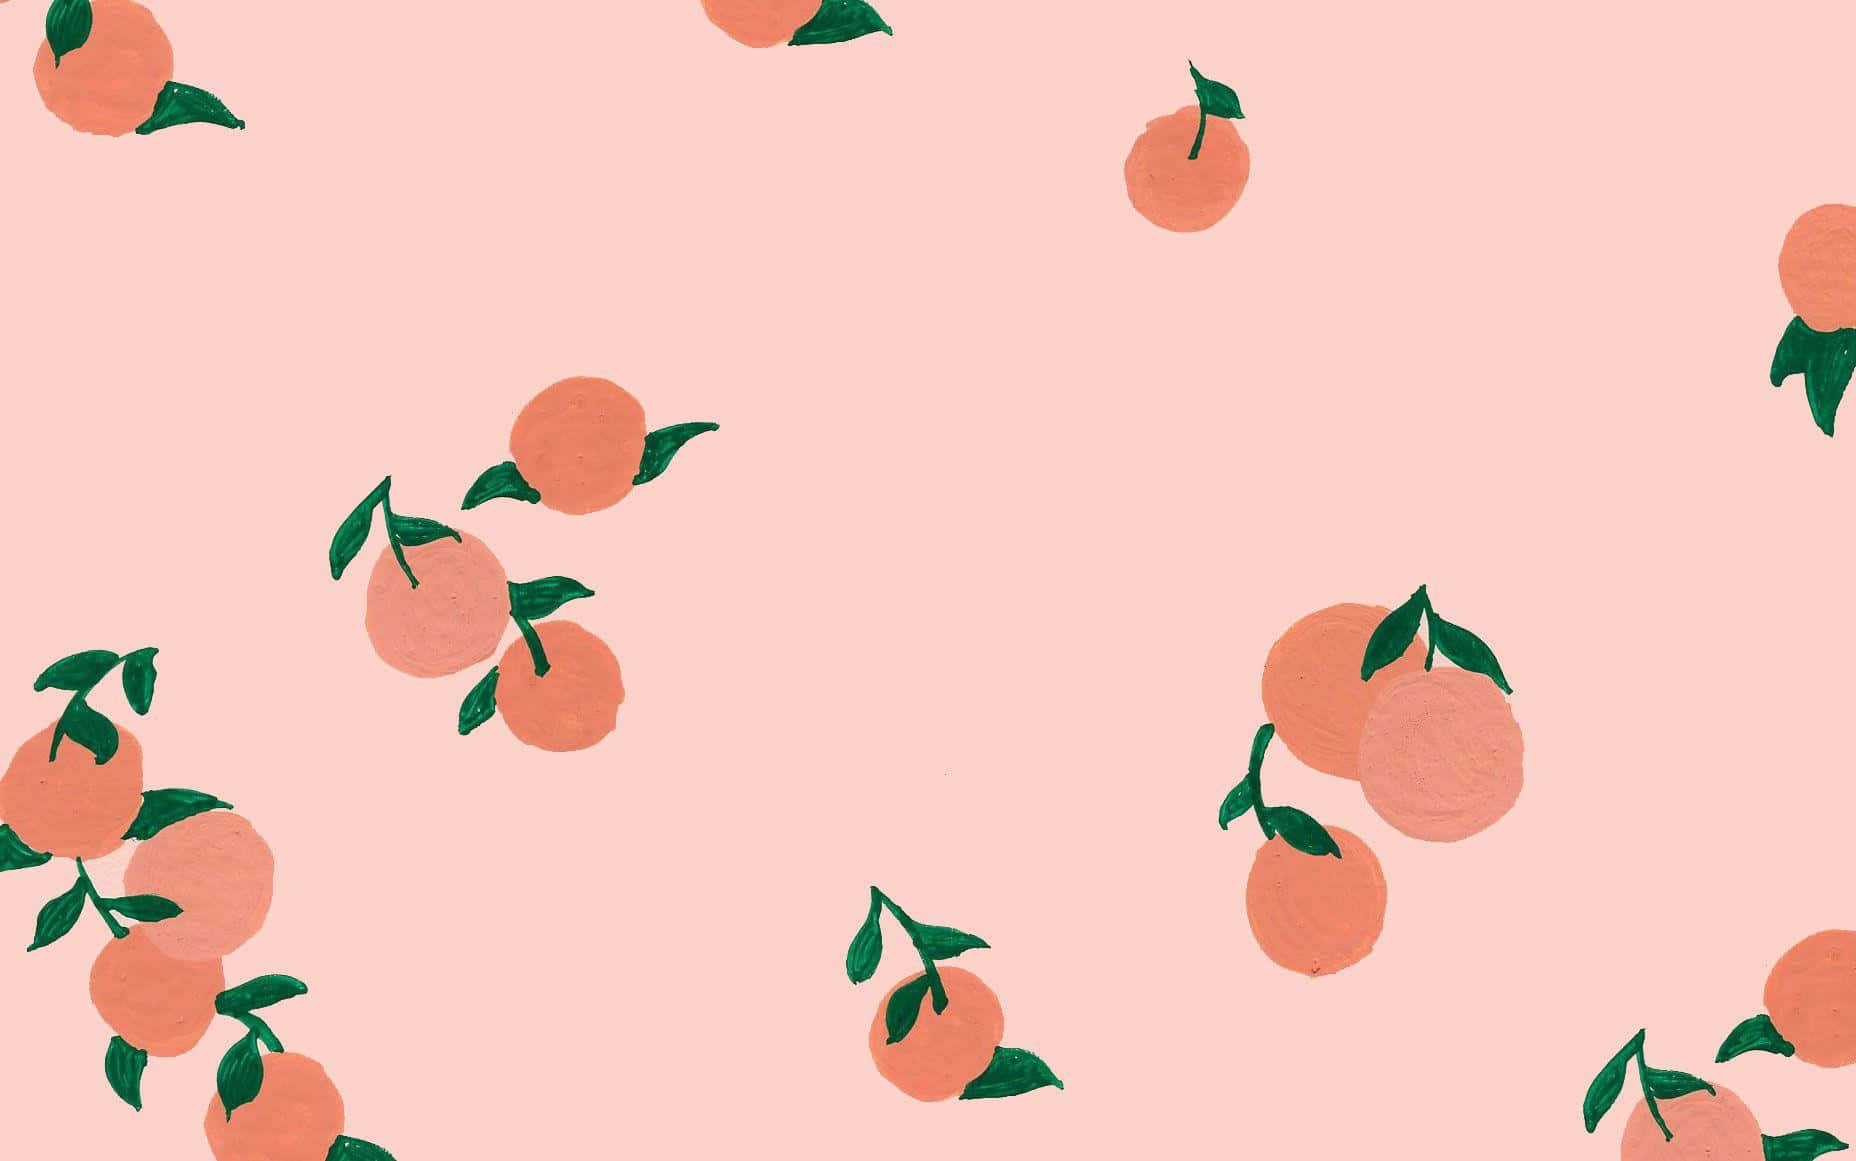 Kawaii Pink Aesthetic Desktop Wallpaper Wallpaper